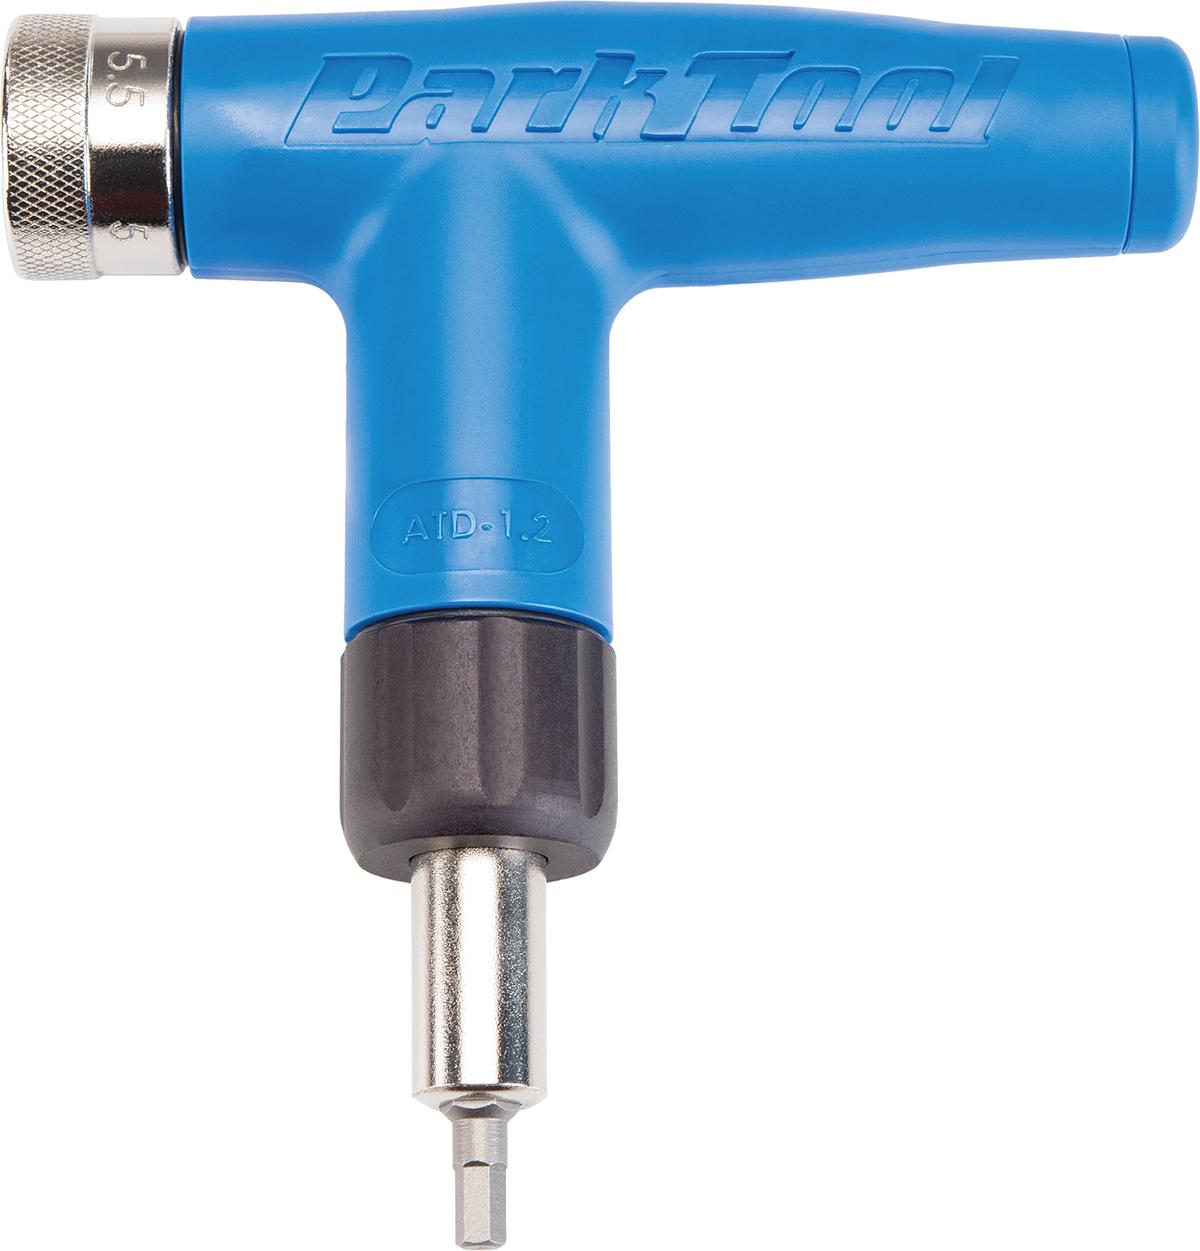 Park Tool Adjustable Torque Driver Atd-1.2  Blue